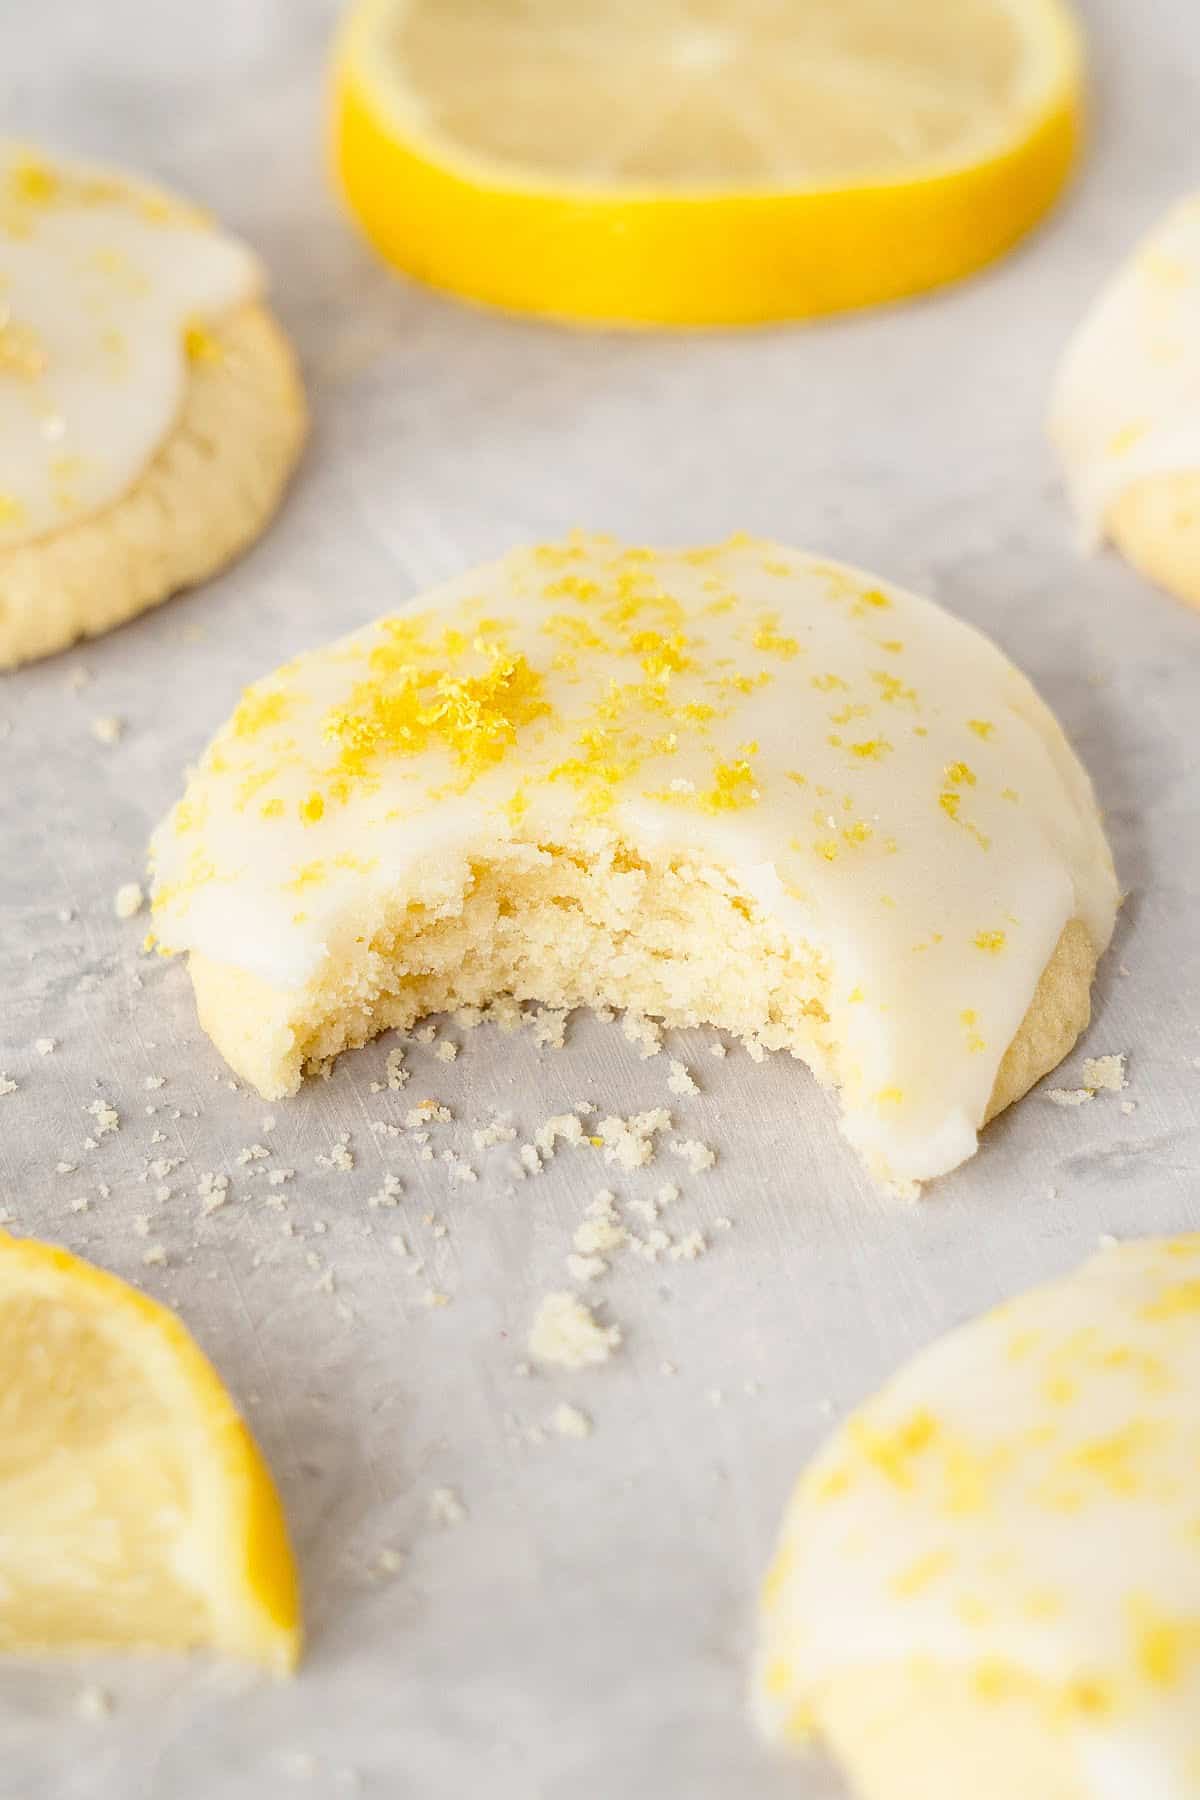 Bitten lemon ricotta cookie with glaze. Gray surface, lemon slices, more cookies.